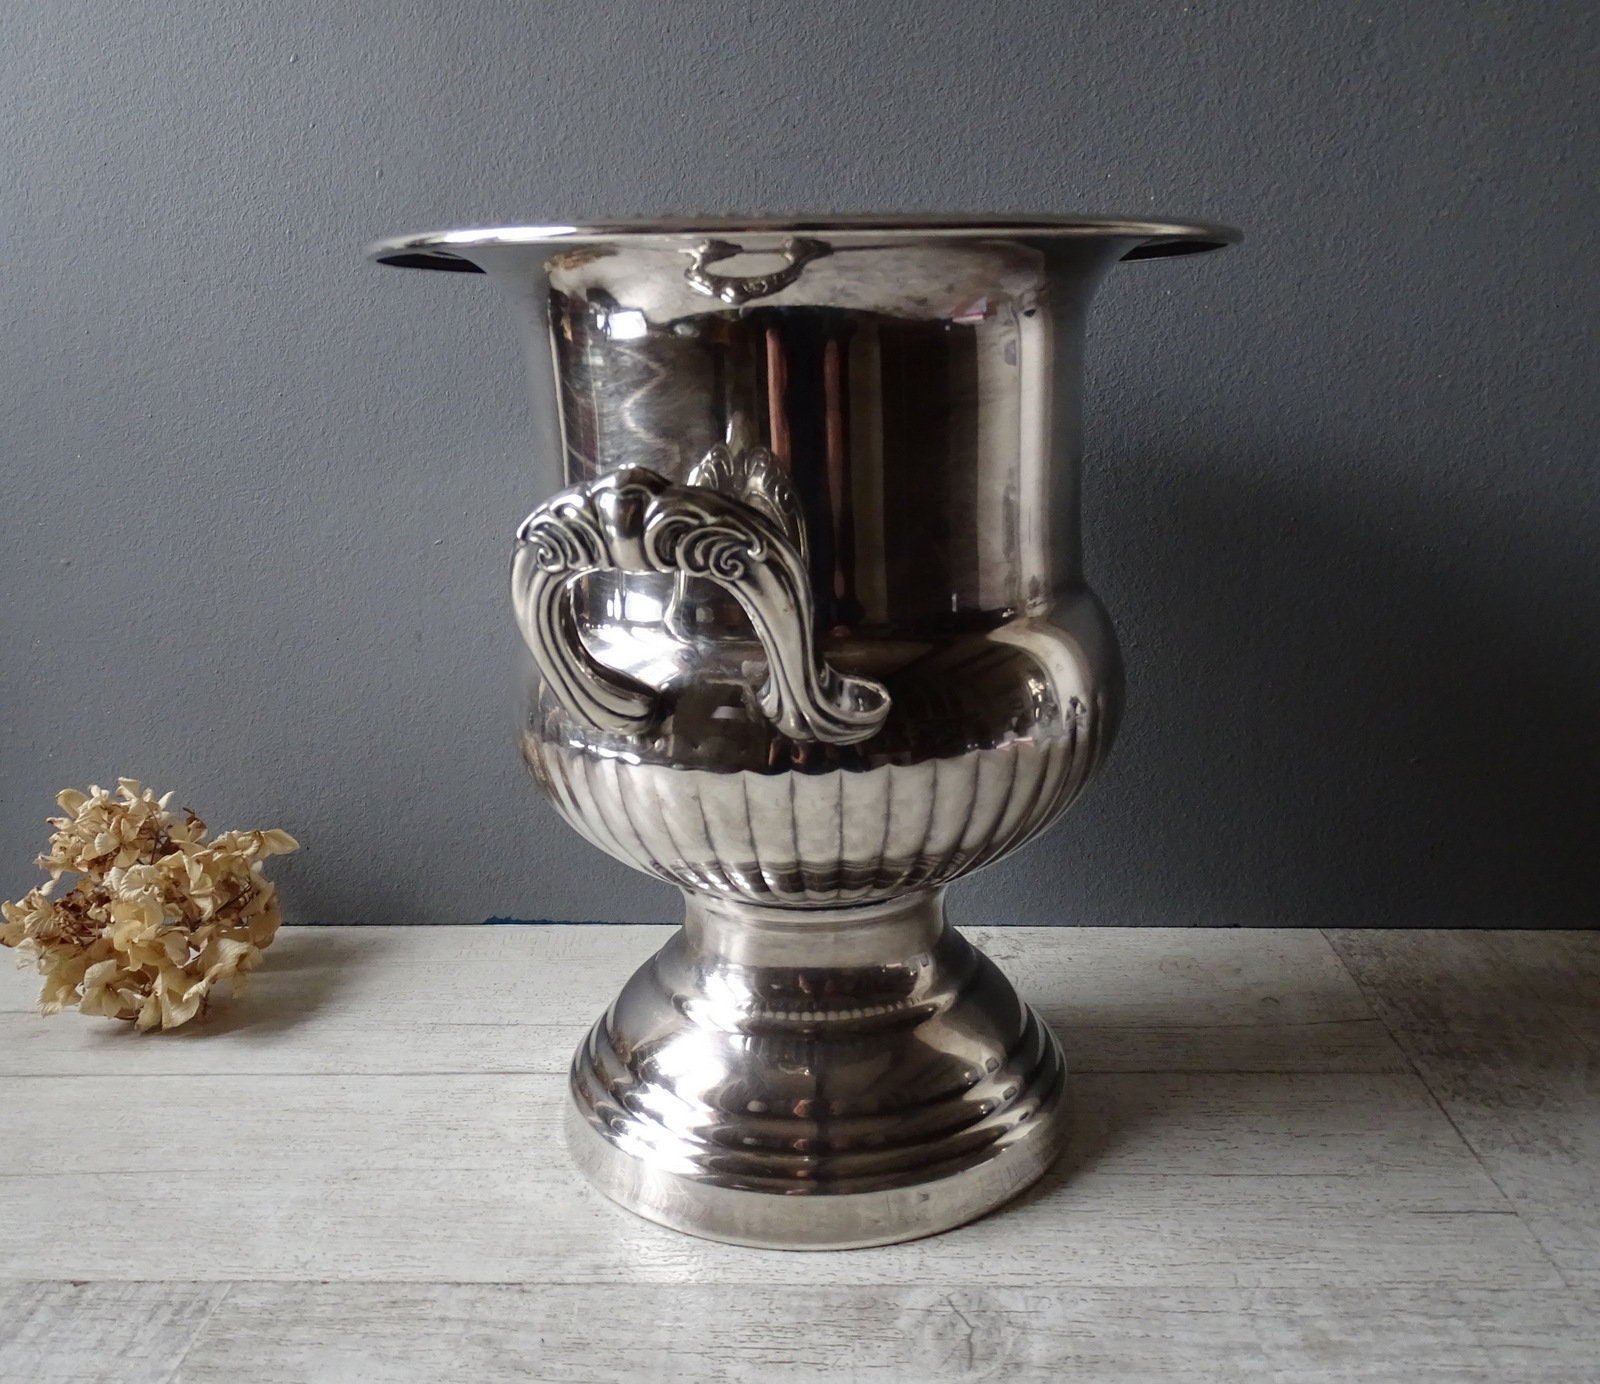 Beau Seau à Champagne Vintage,/Medicis Shape Silver Plated Metal. Vintage Cooler Ice Bucket.